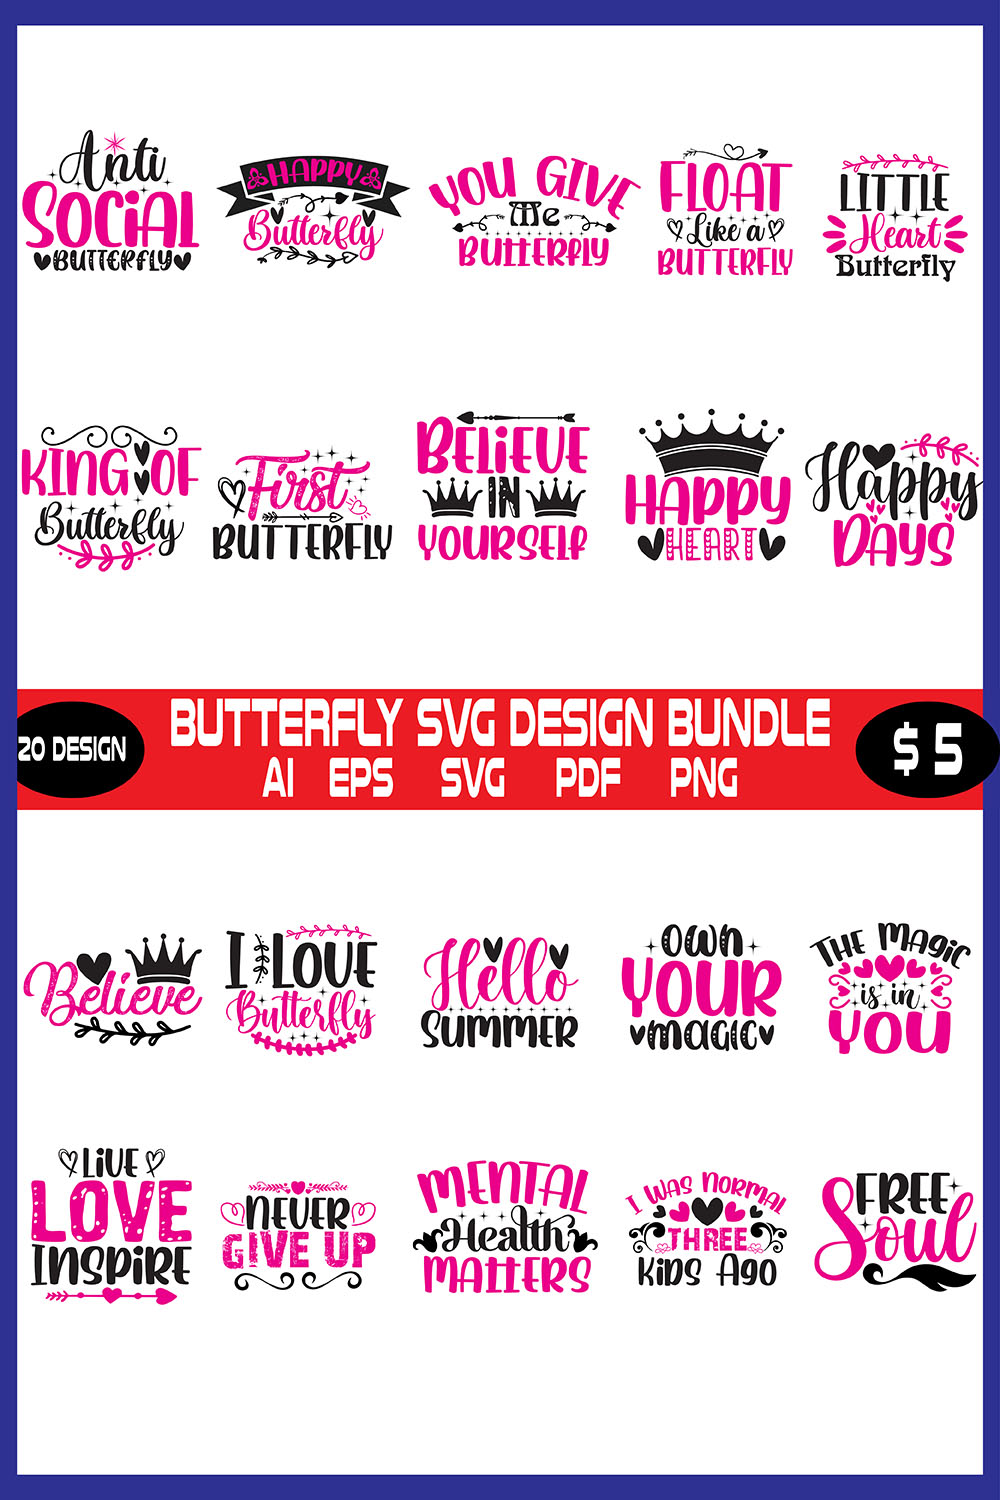 Butterfly Svg Design Bundle pinterest preview image.